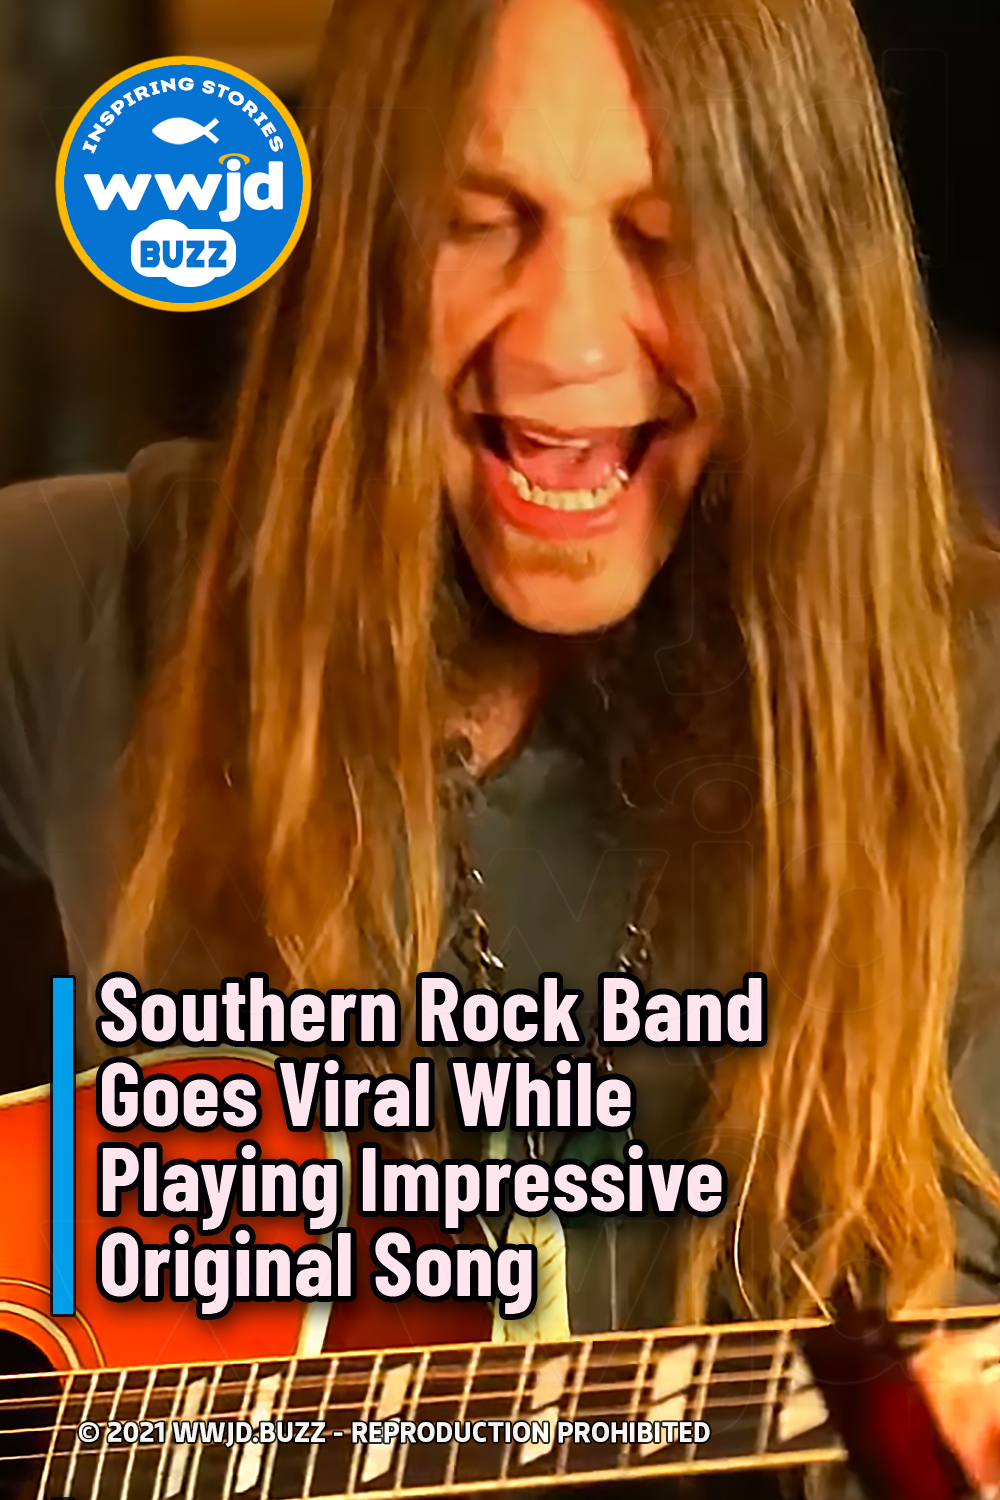 Southern Rock Band Goes Viral While Playing Impressive Original Song